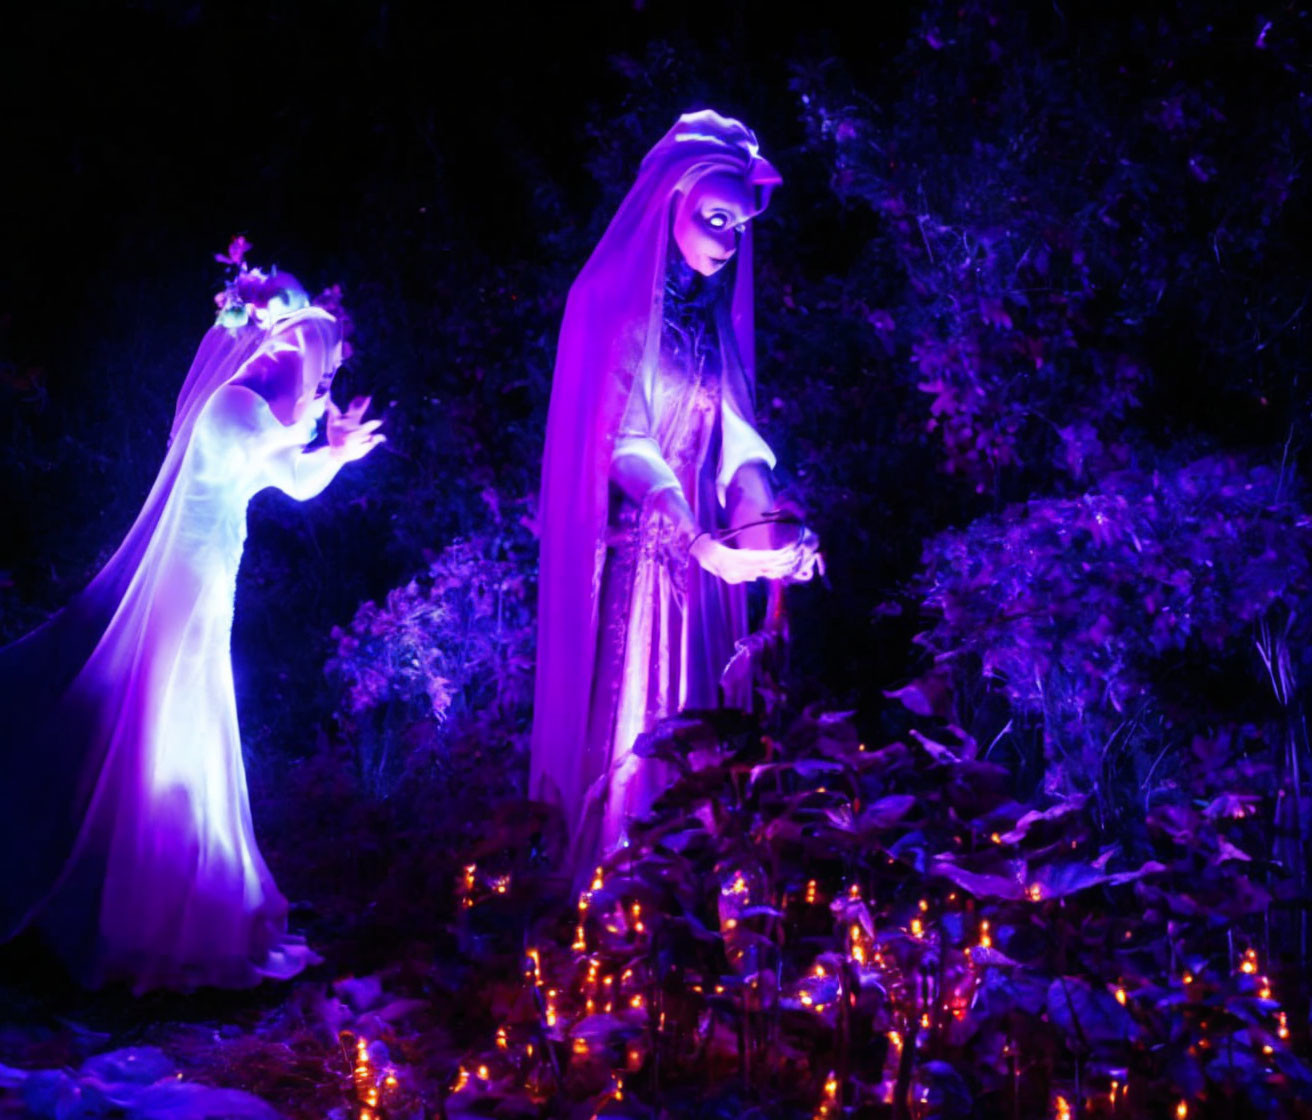 Ghostly wraiths haunt a midnight garden on Hallowe